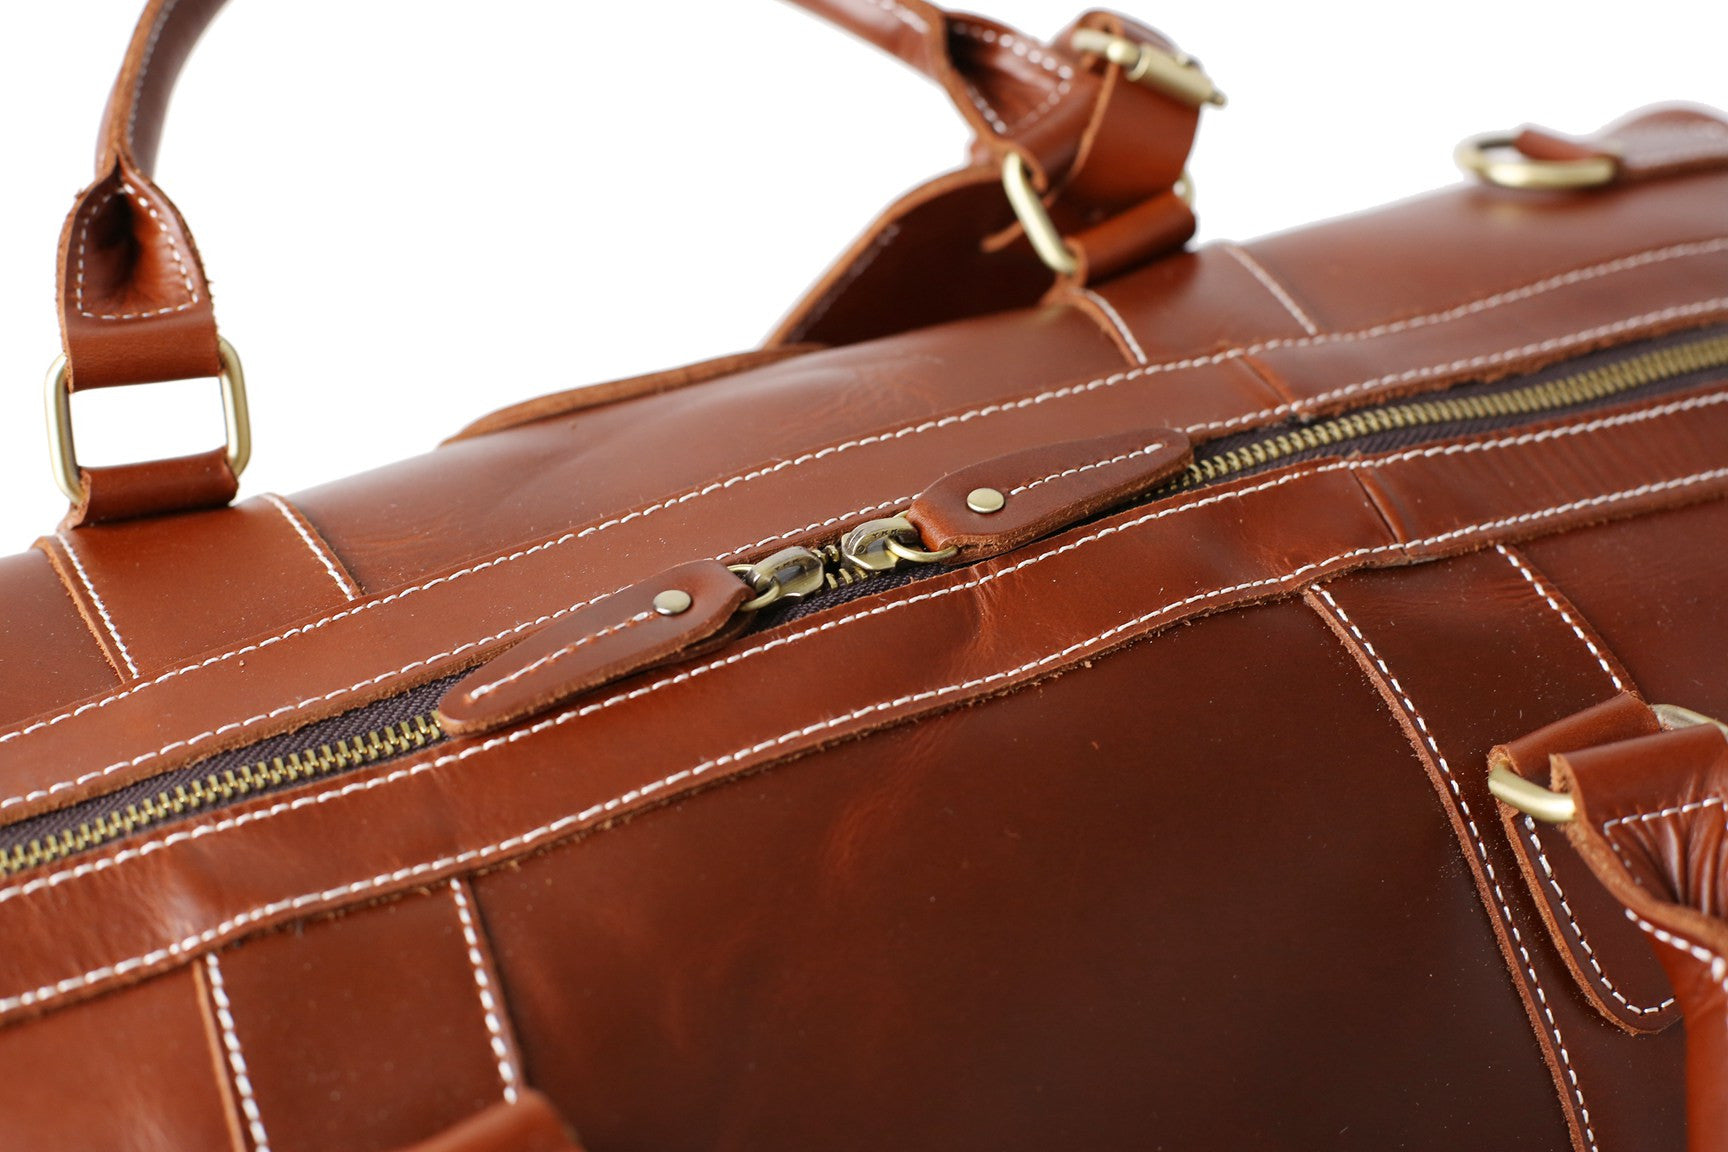 Handmade Men's Travel Bag, Pull Up Leather Duffle Bag